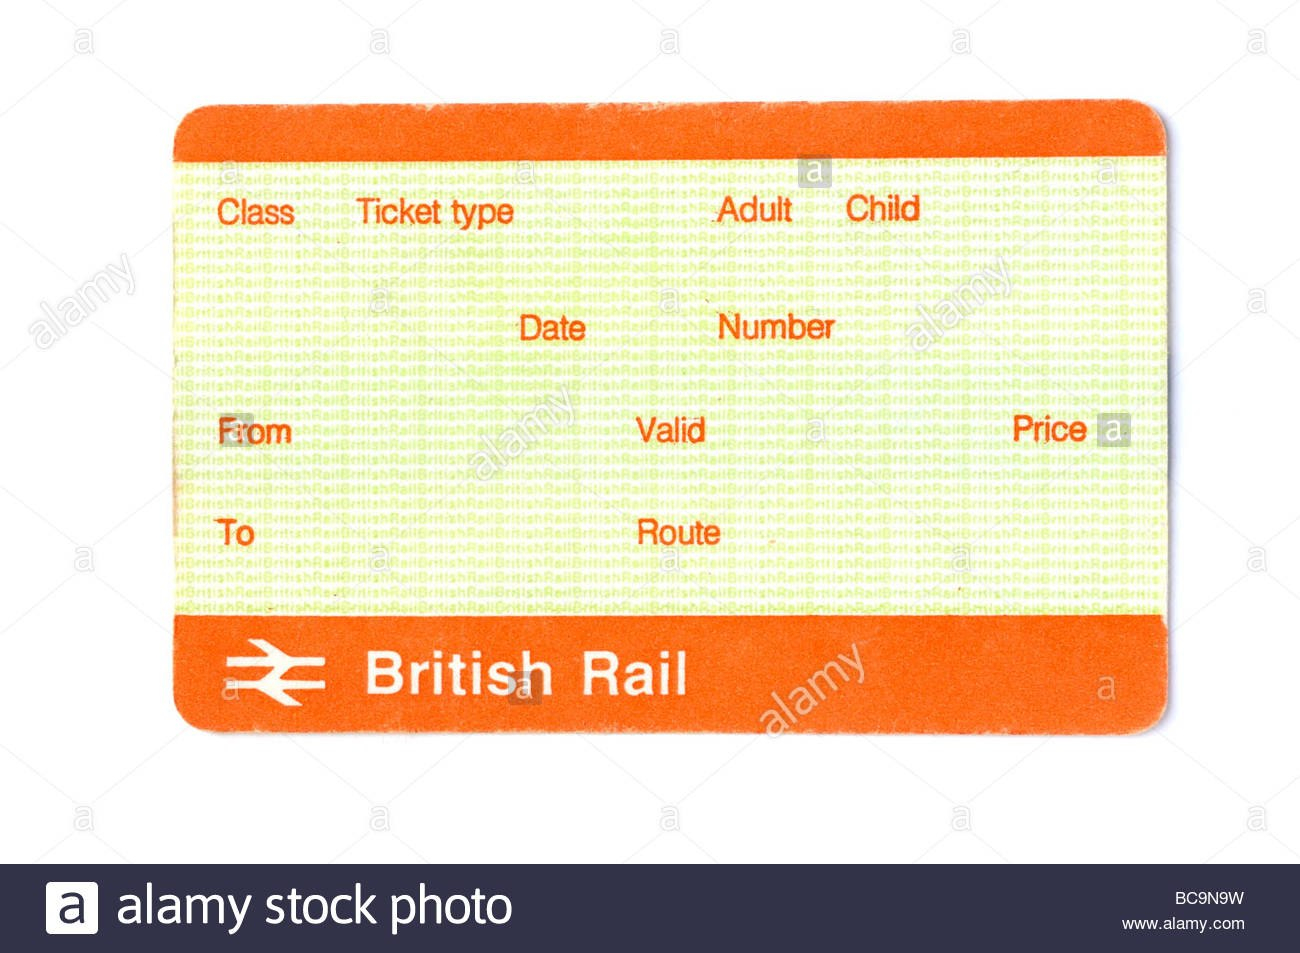 Train Ticket Blank Stock Photos  Train Ticket Blank Stock Images pertaining to Blank Train Ticket Template